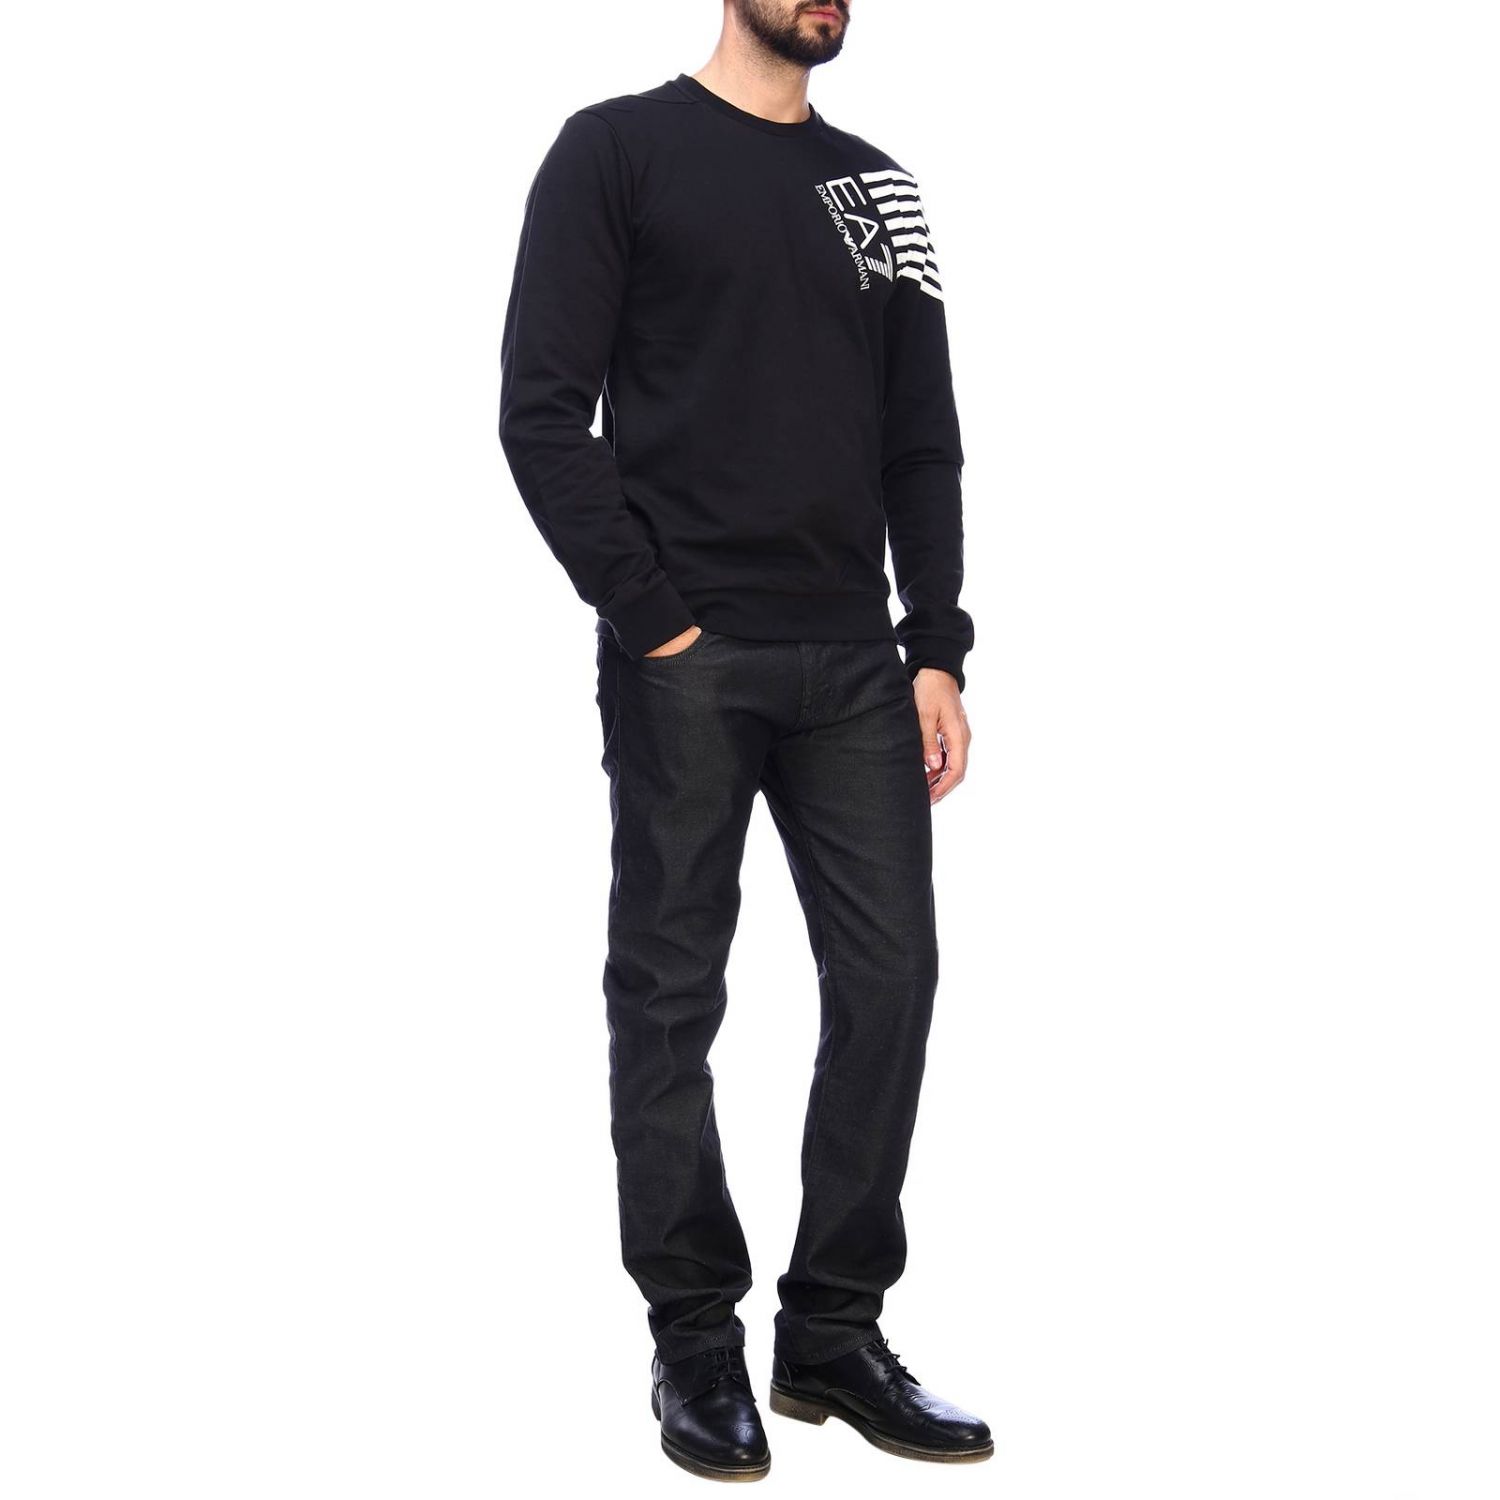 Ea7 Outlet: Sweater men - Black | Sweater Ea7 3GPM80 PJ05Z GIGLIO.COM